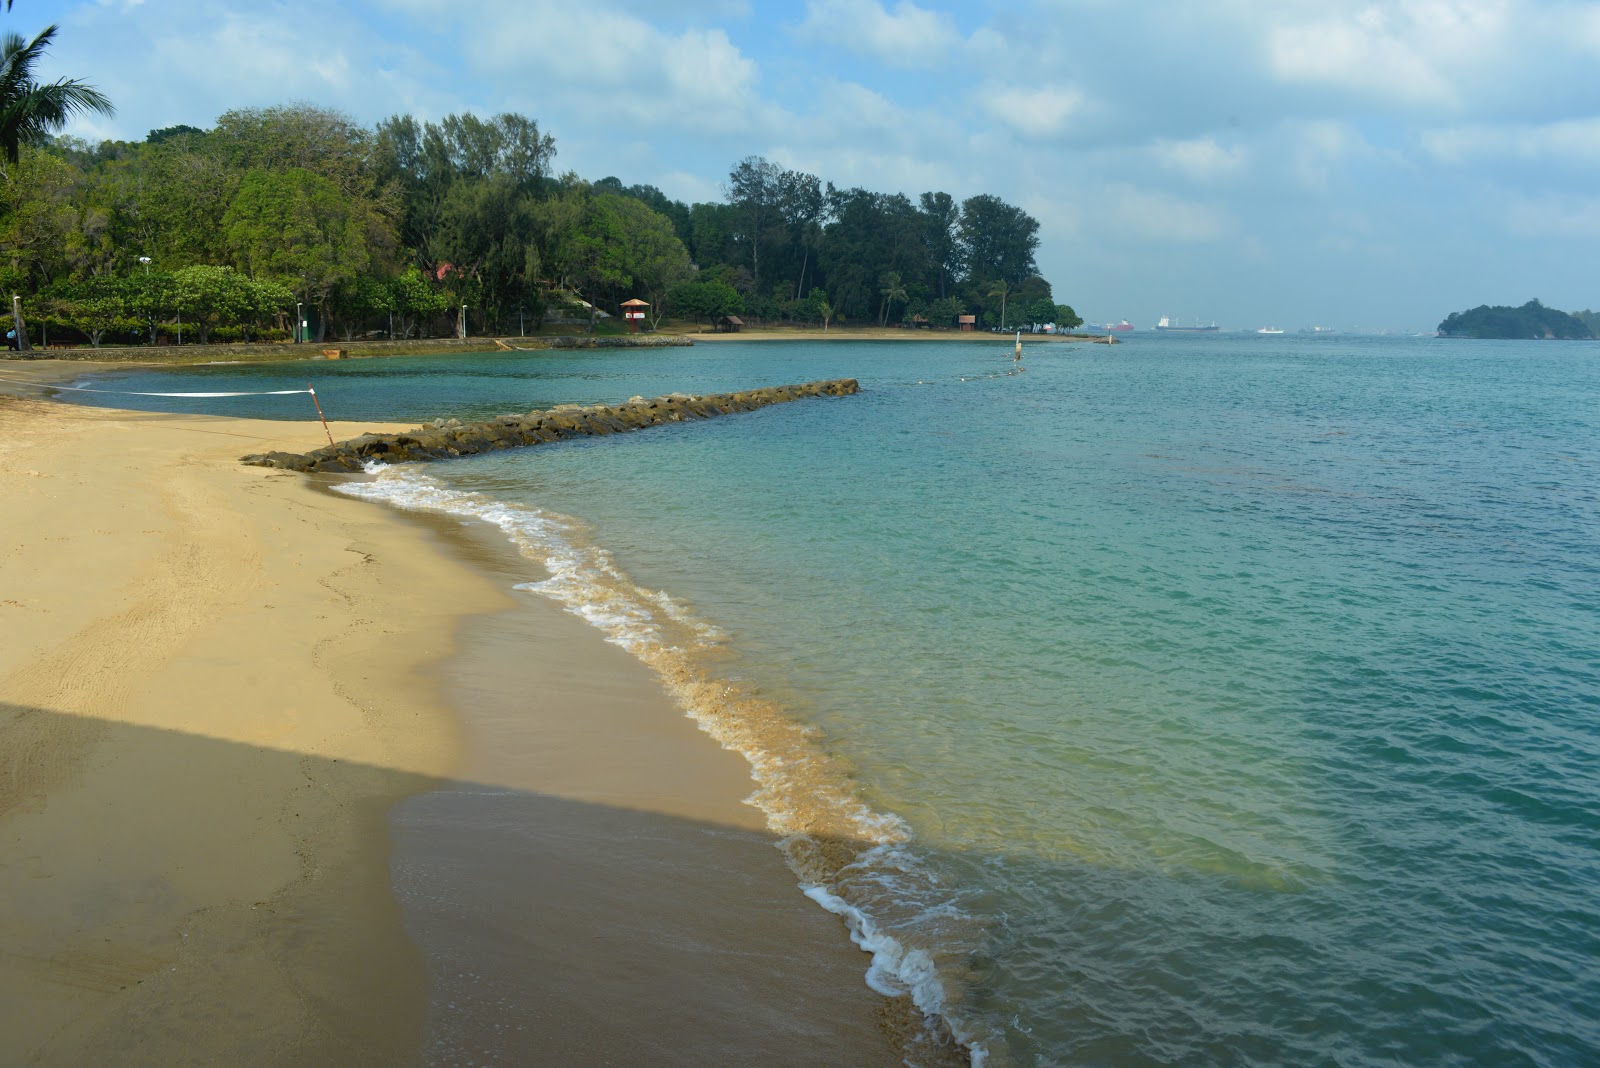 Foto de St John's Island Beach - lugar popular entre os apreciadores de relaxamento